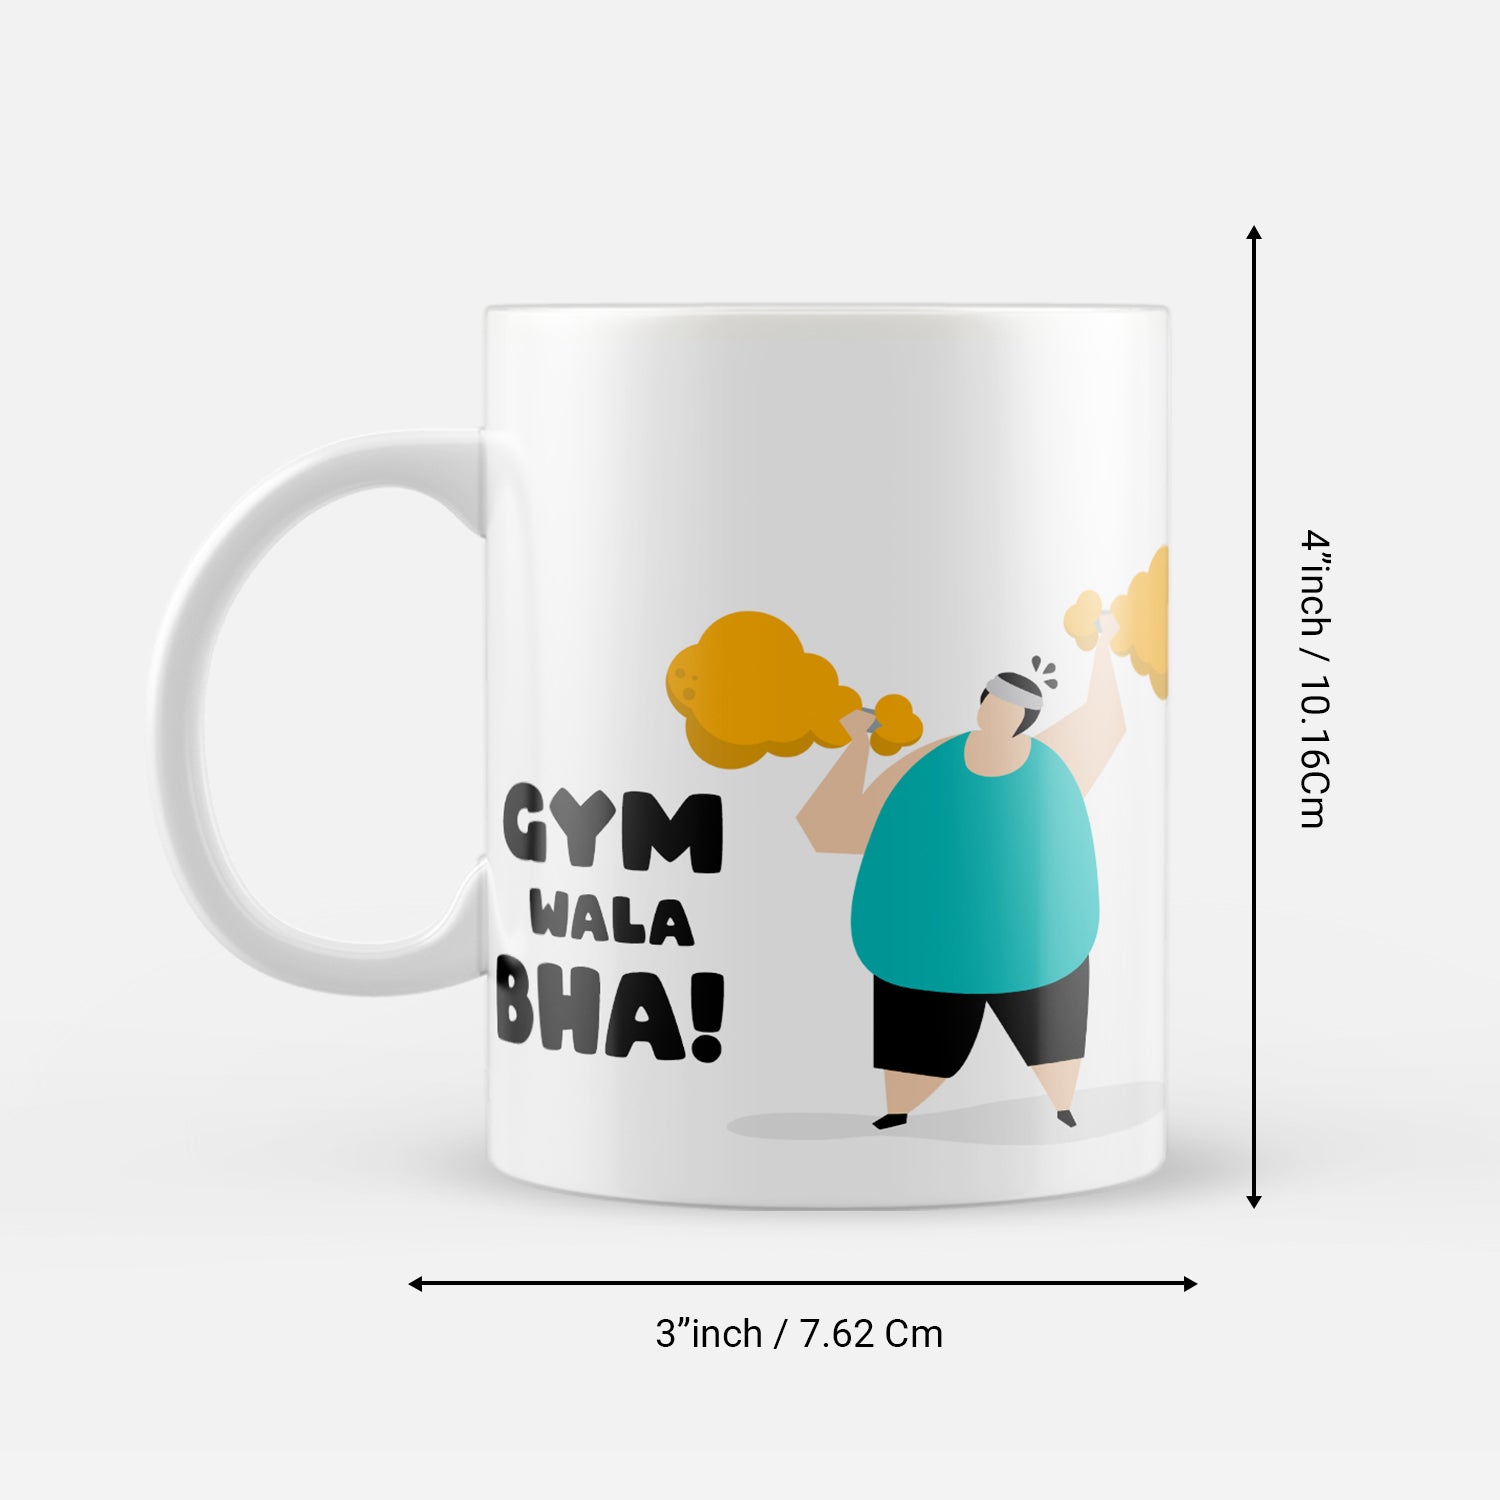 "Gym Wala Bhai" Brother Ceramic Coffee/Tea Mug 3